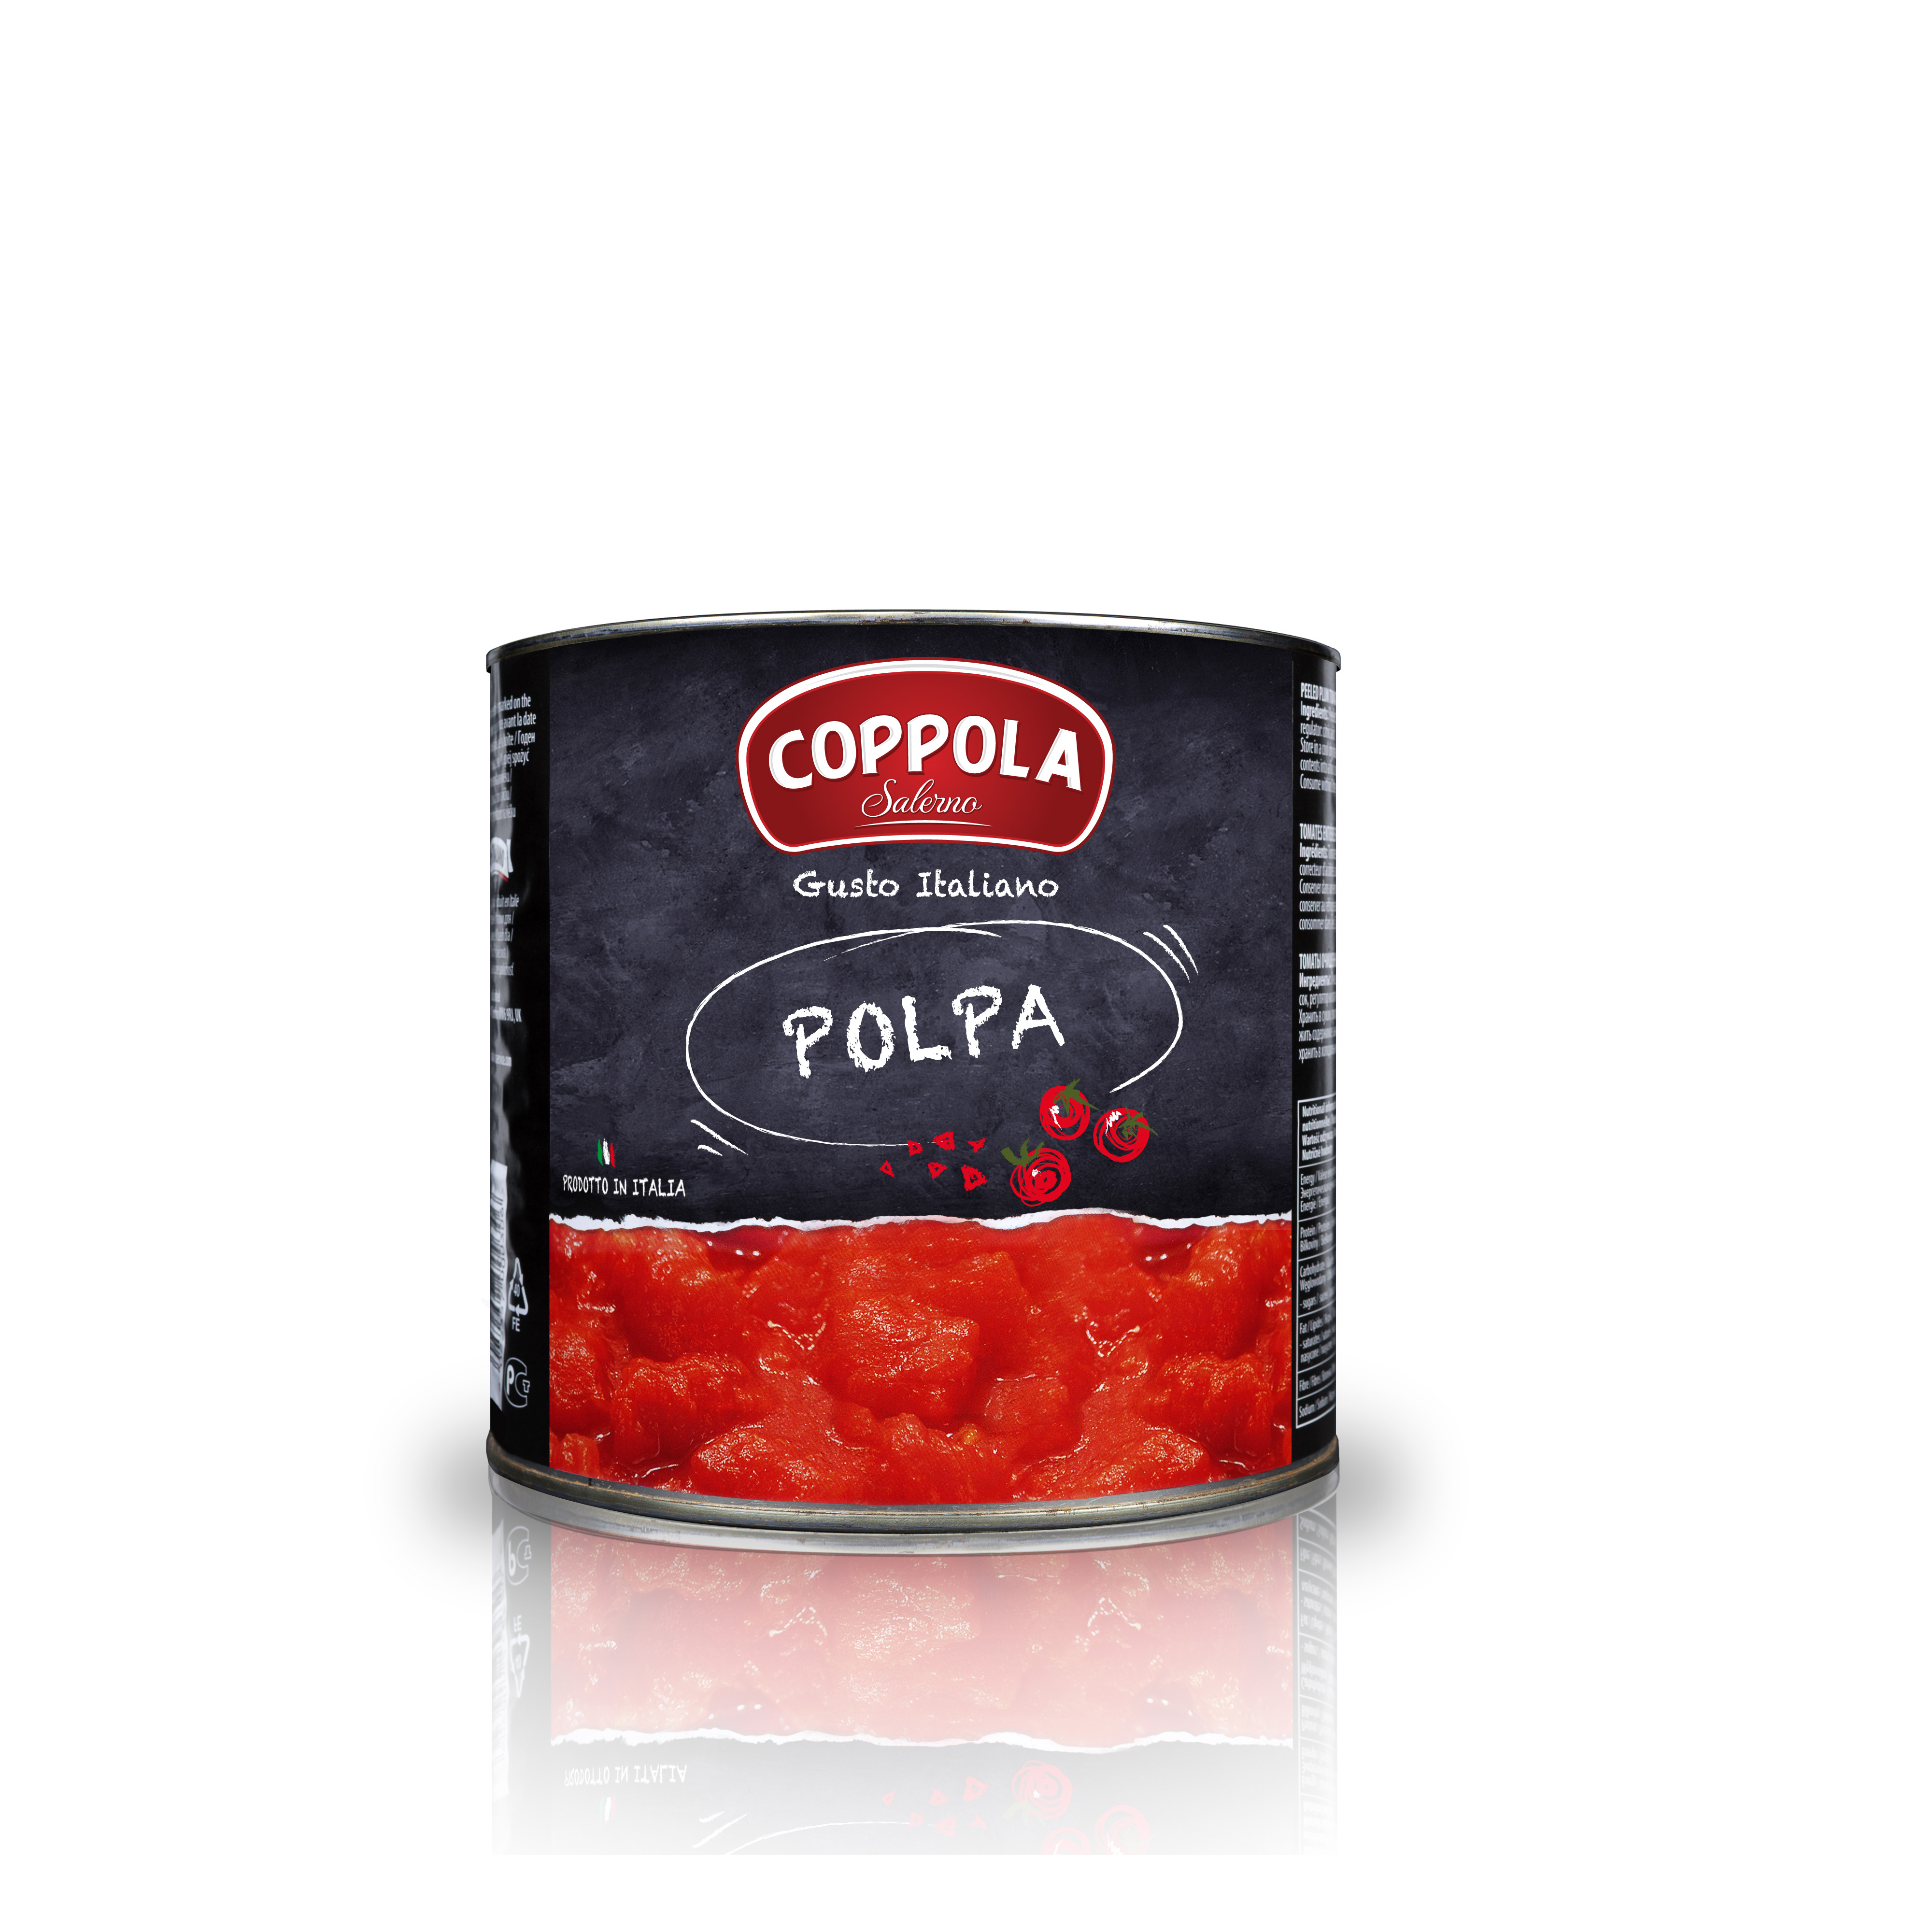  Coppola Polpa